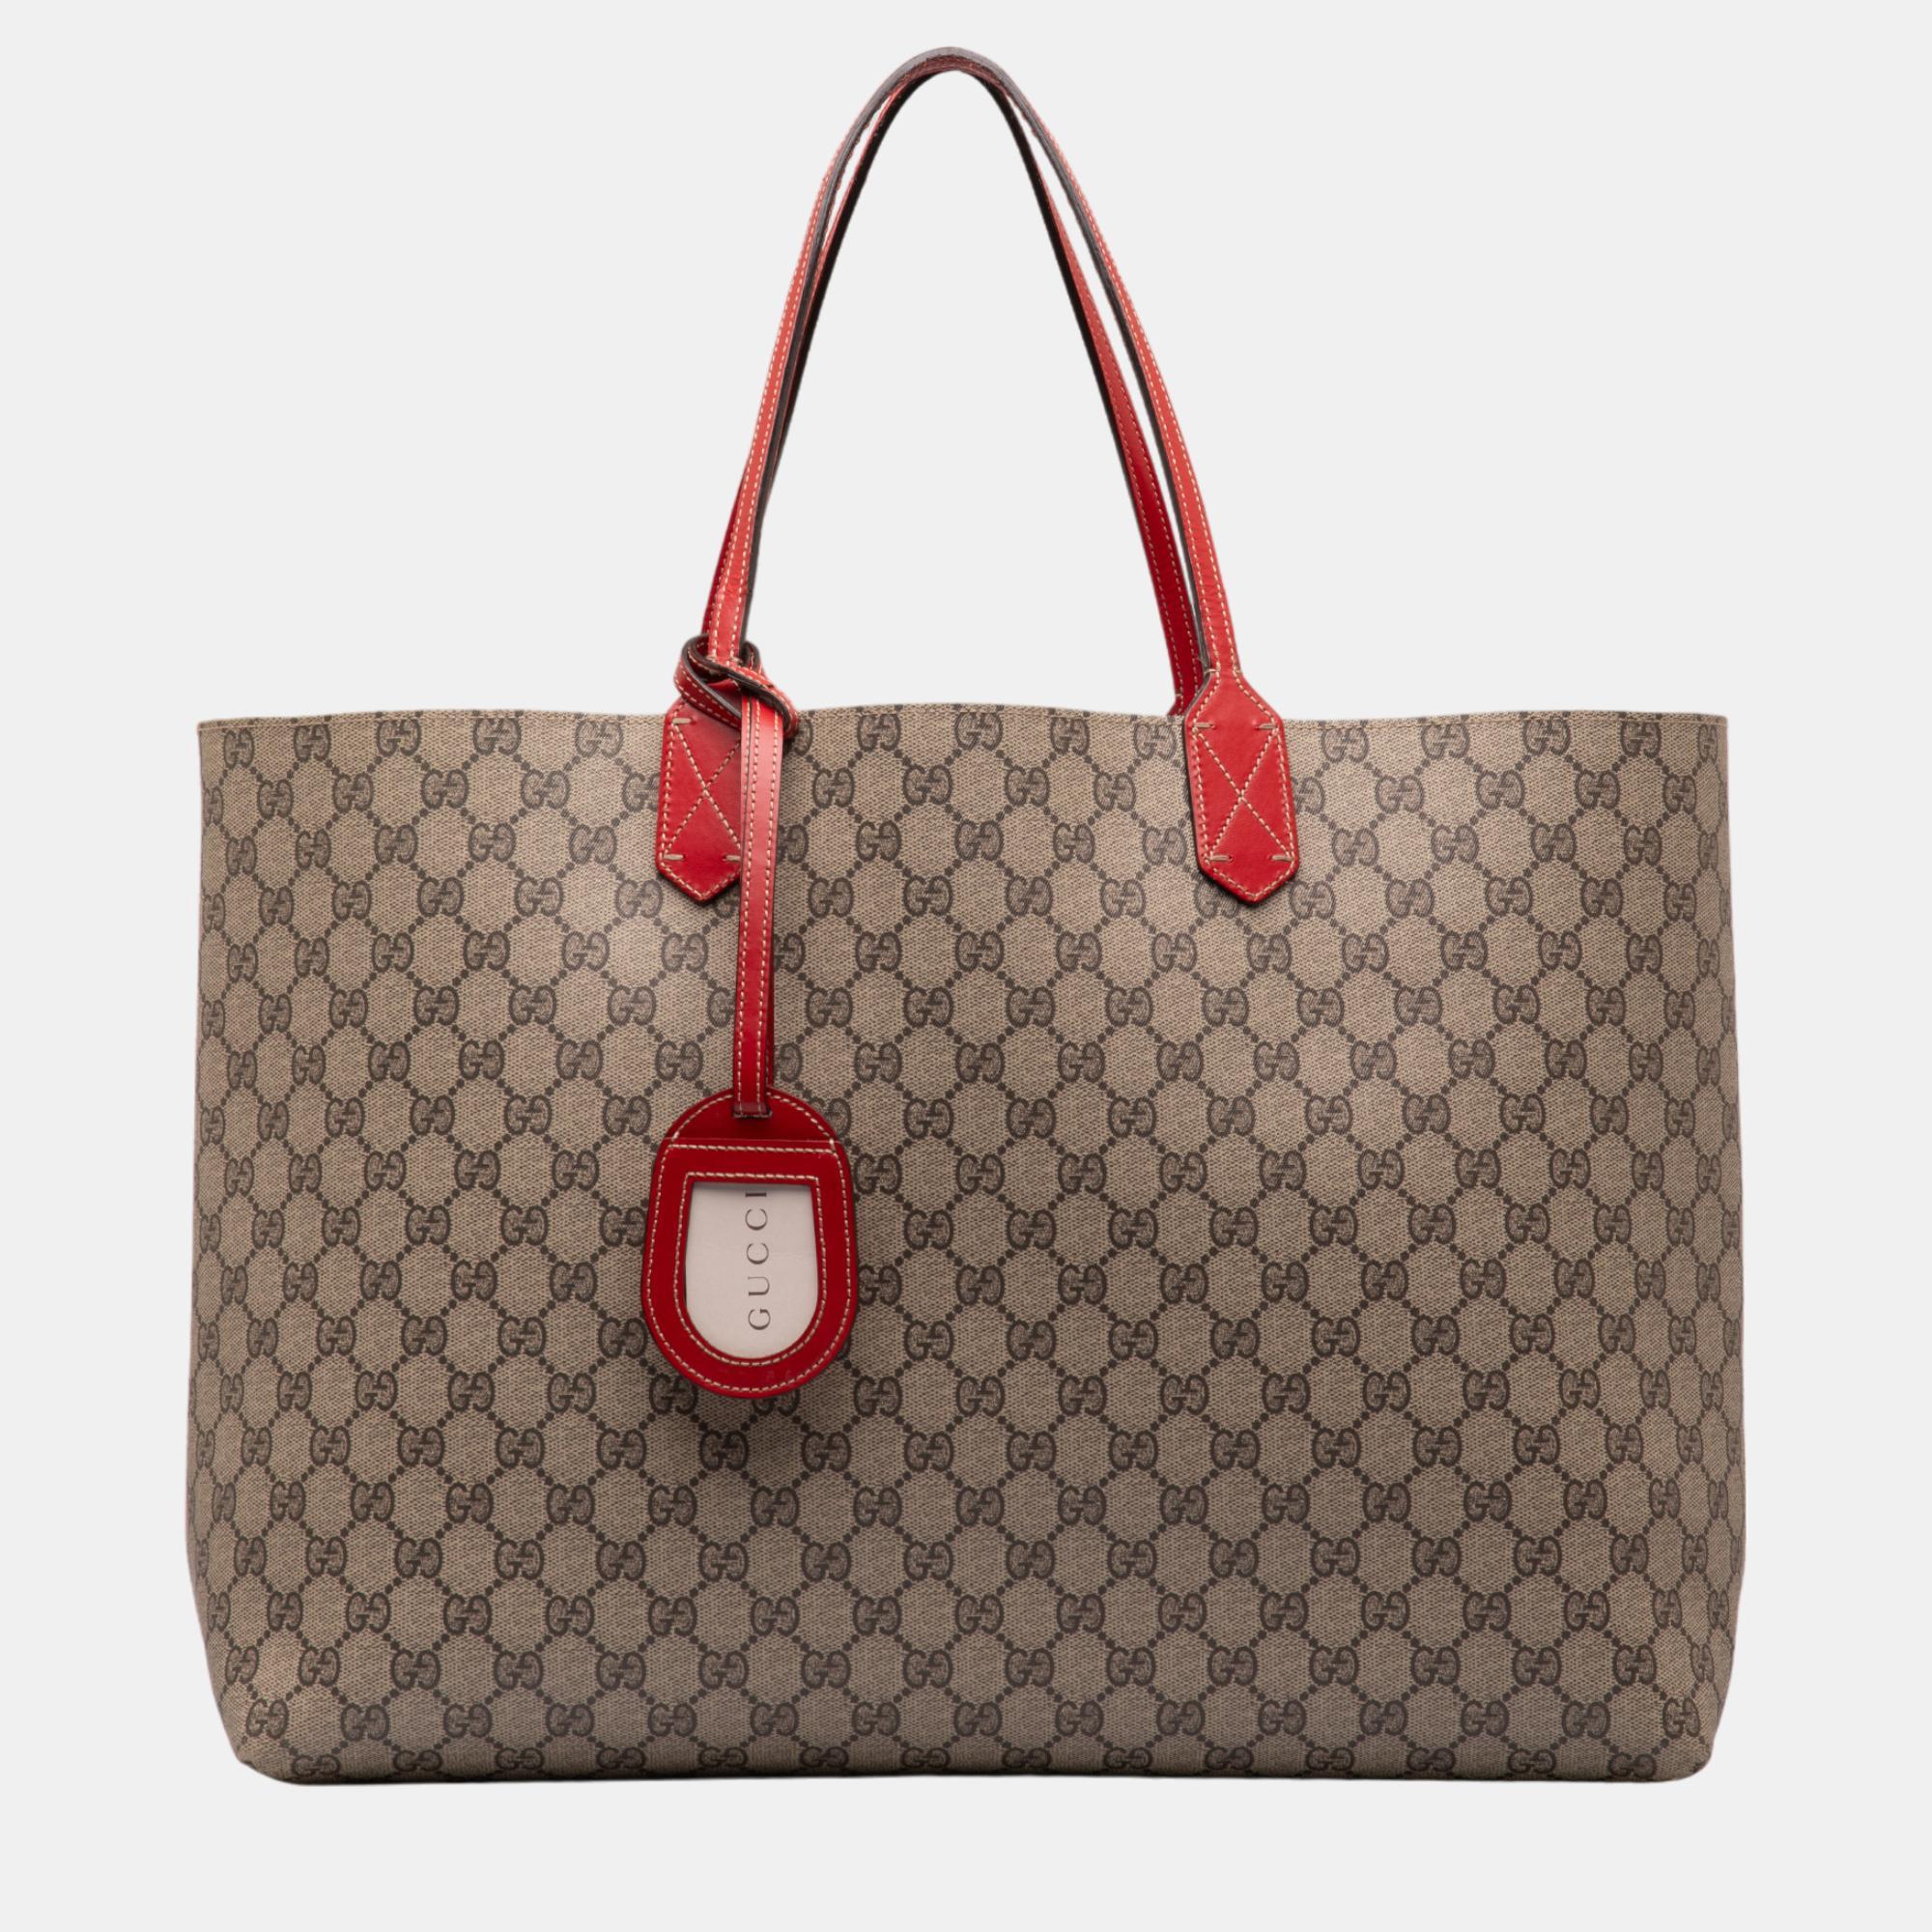 Gucci beige/brown large gg supreme reversible tote bag